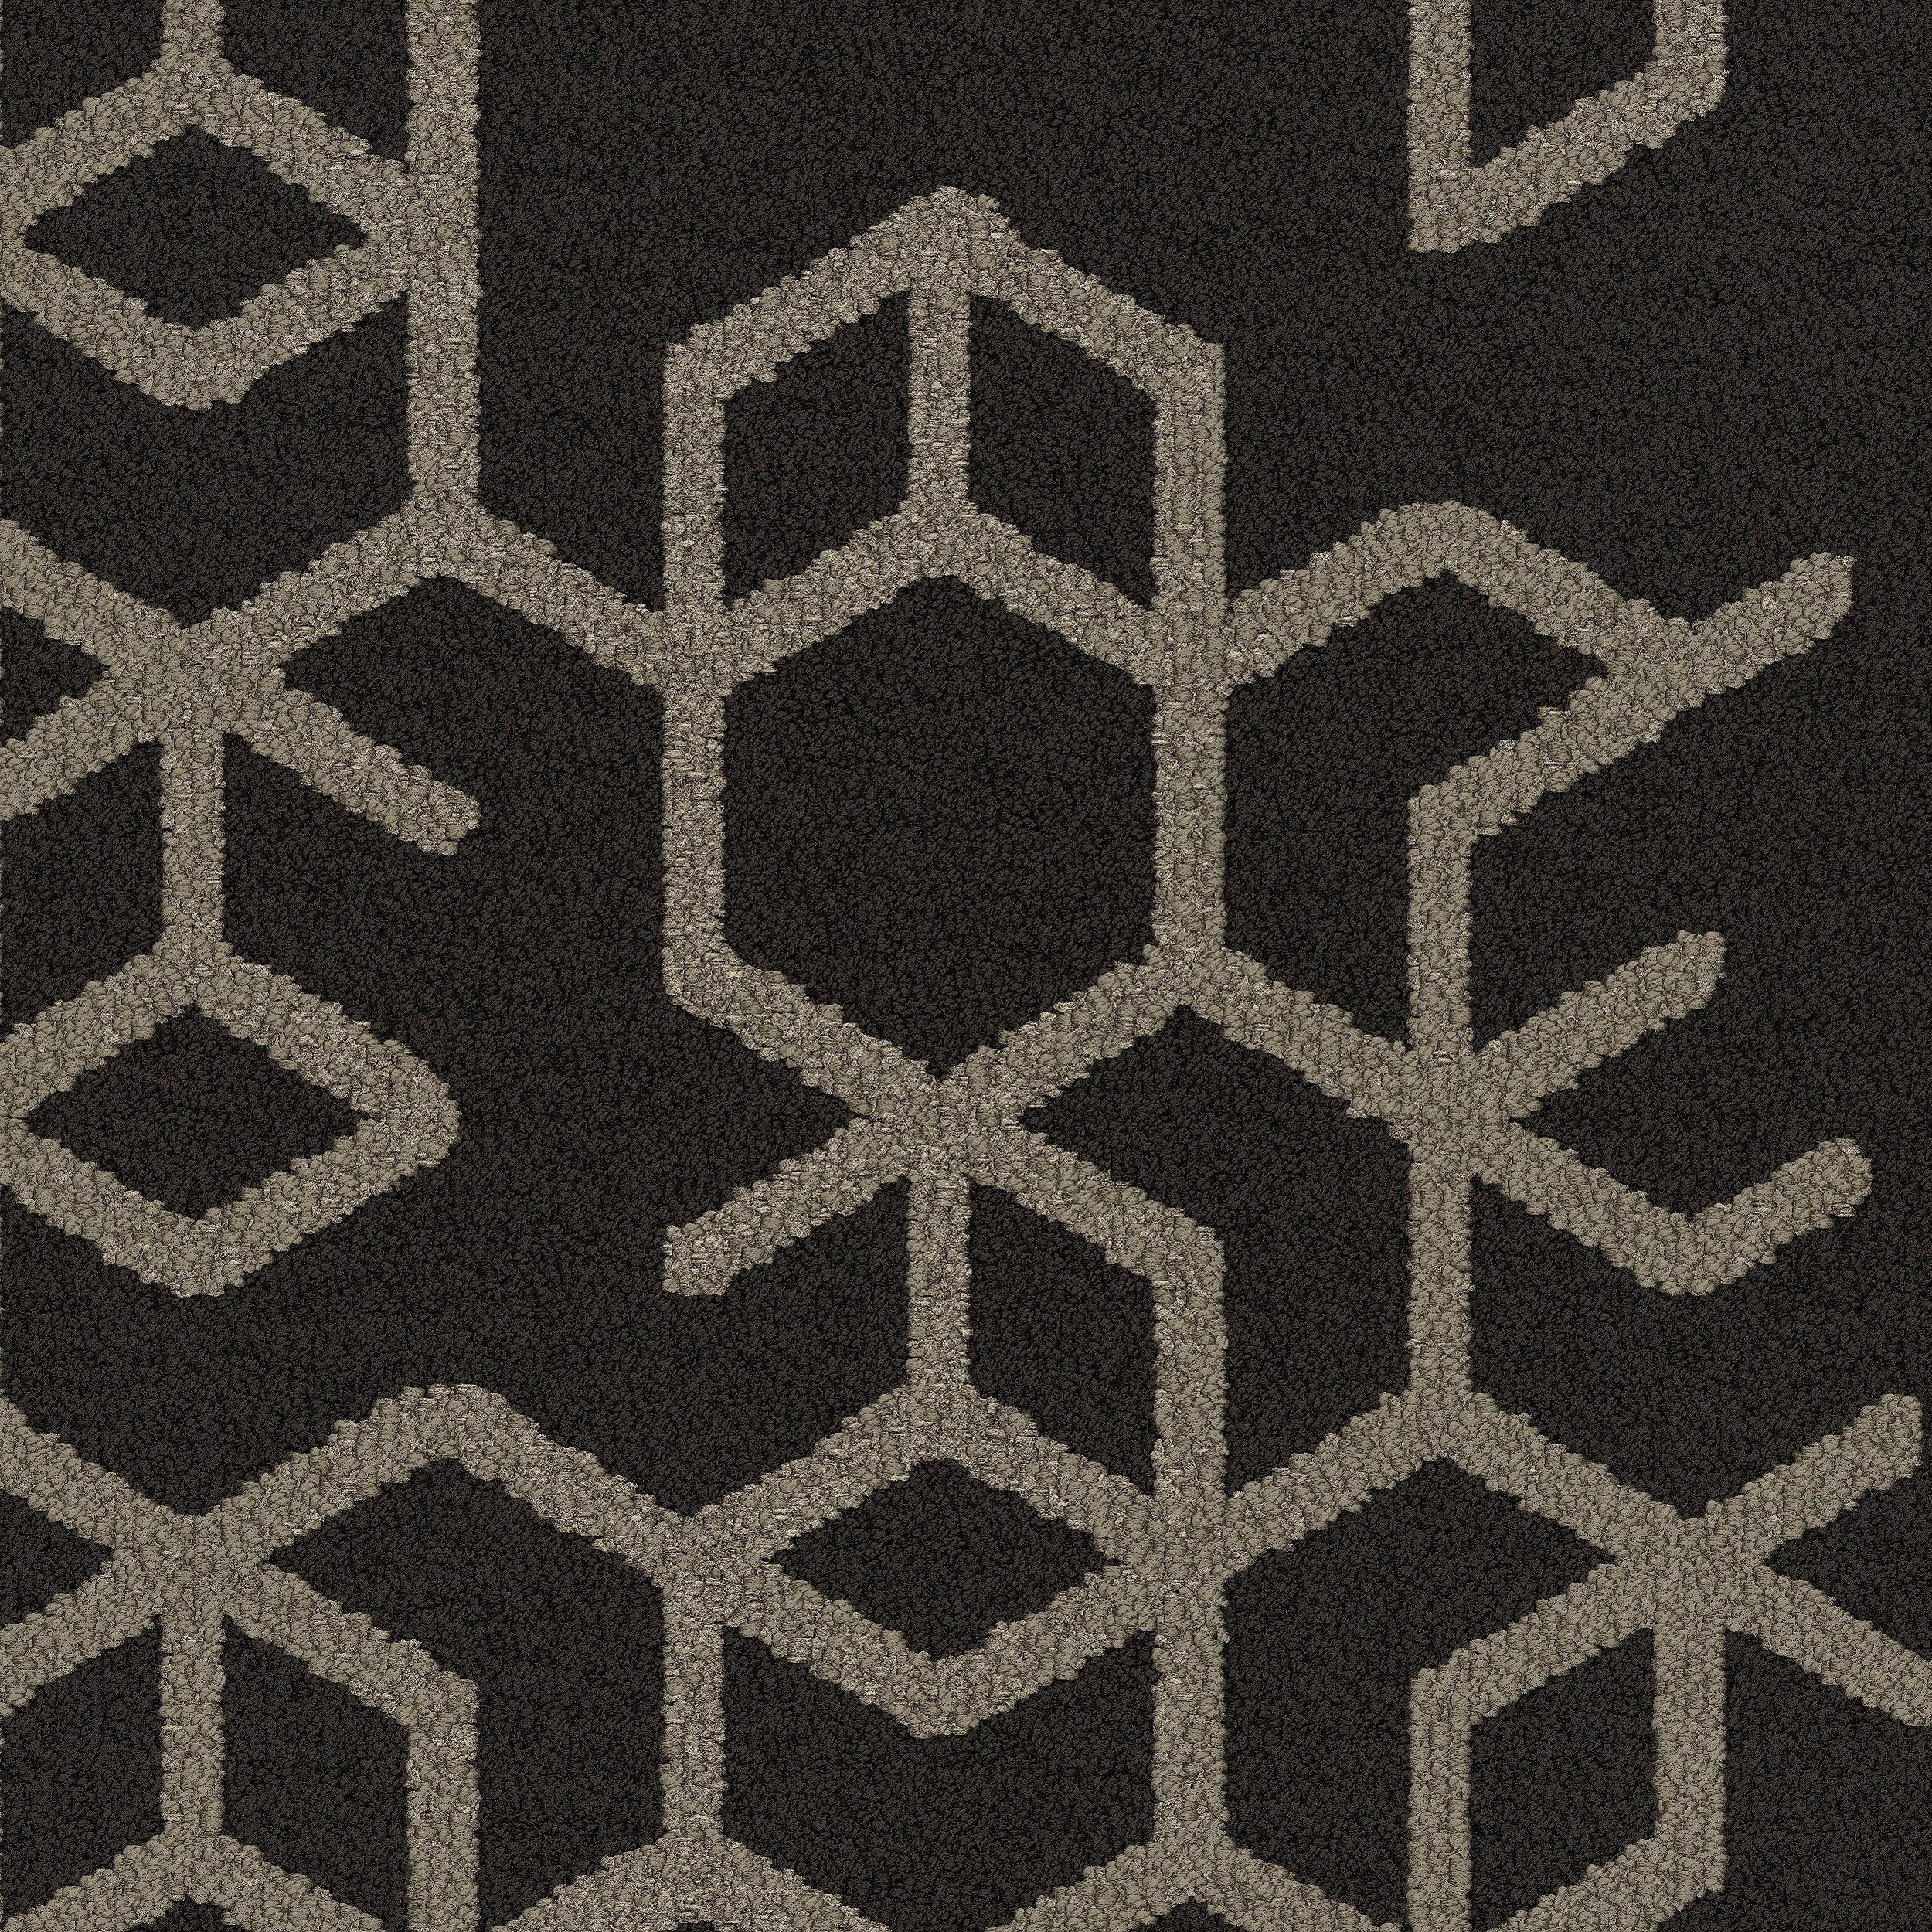 Bees Knees Carpet Tile In Desert Shadow imagen número 6